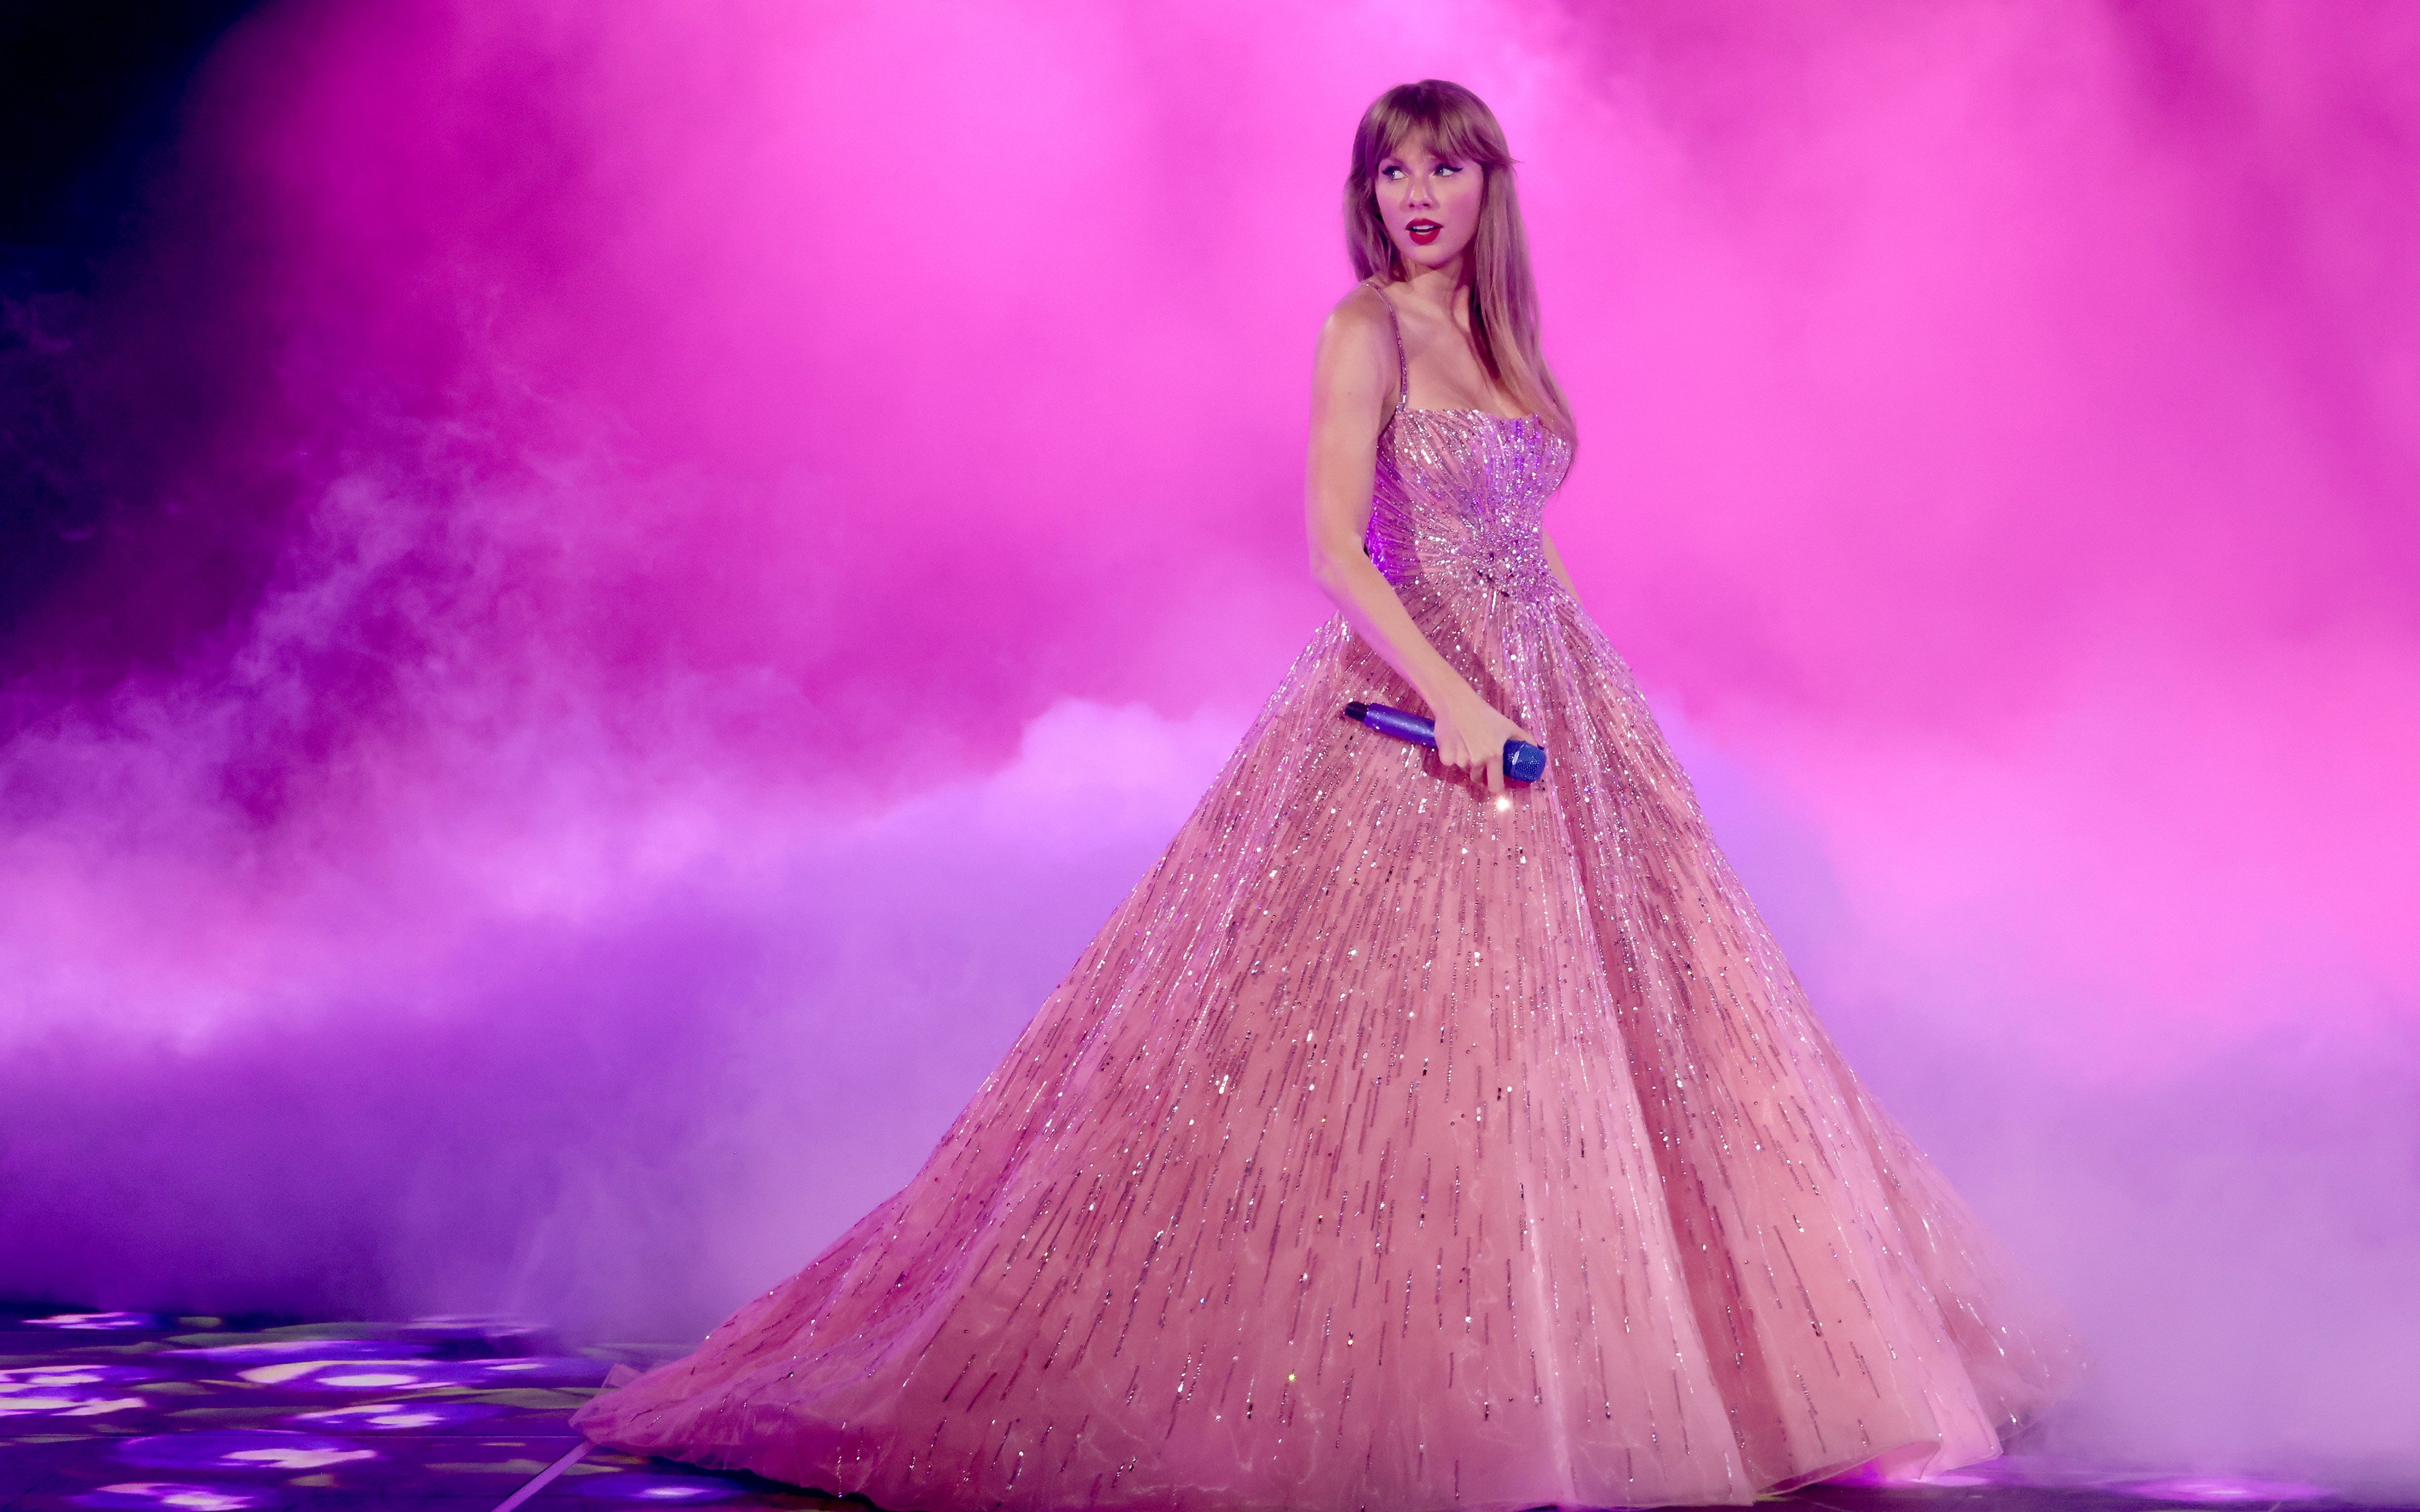 Taylor Swift Outfits Eras Tour: Her Best Eras Tour Looks